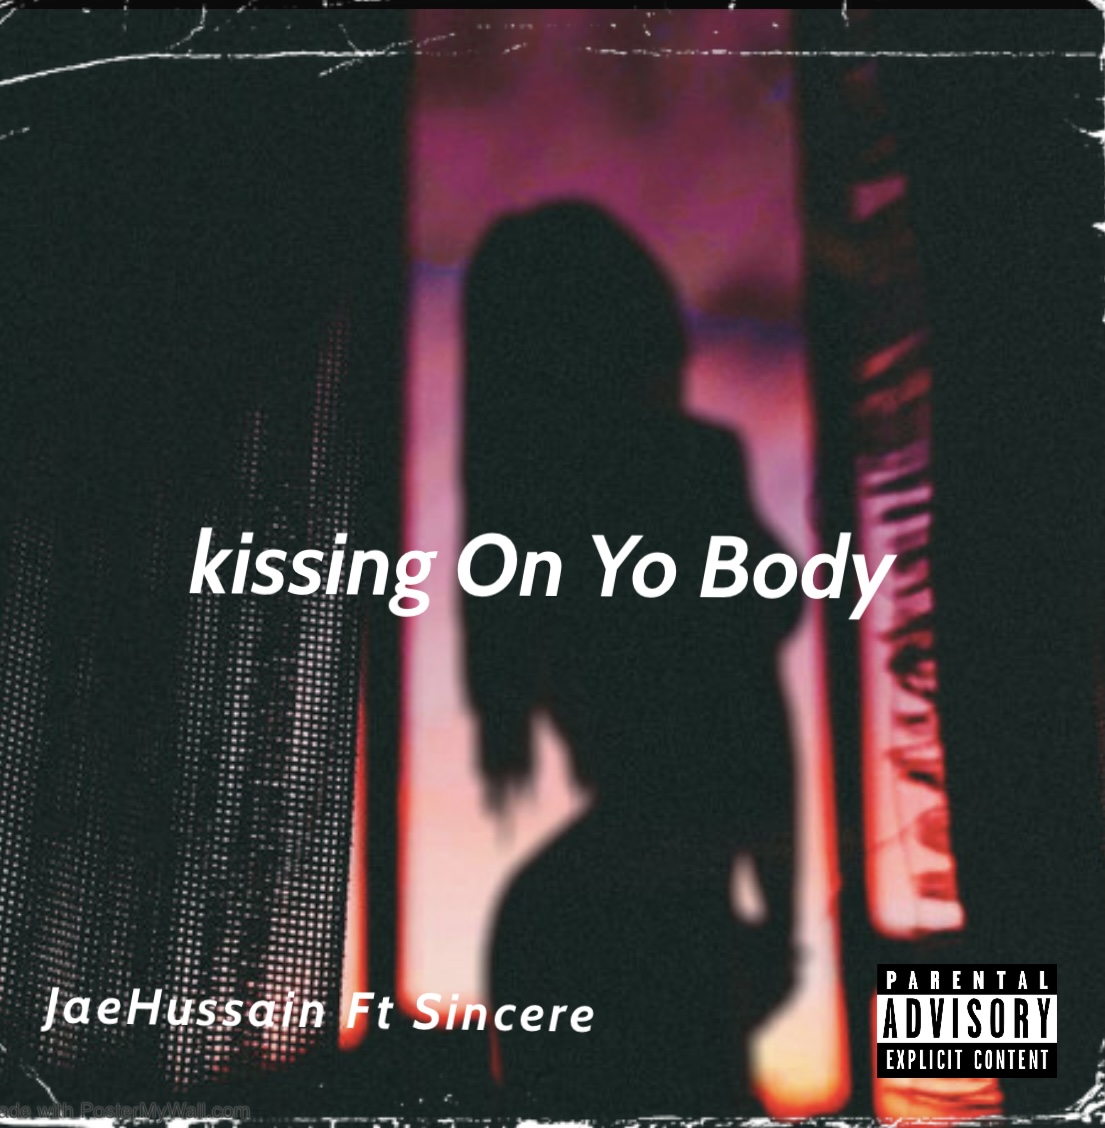 JAEHUSSAIN - Kissing on yo body